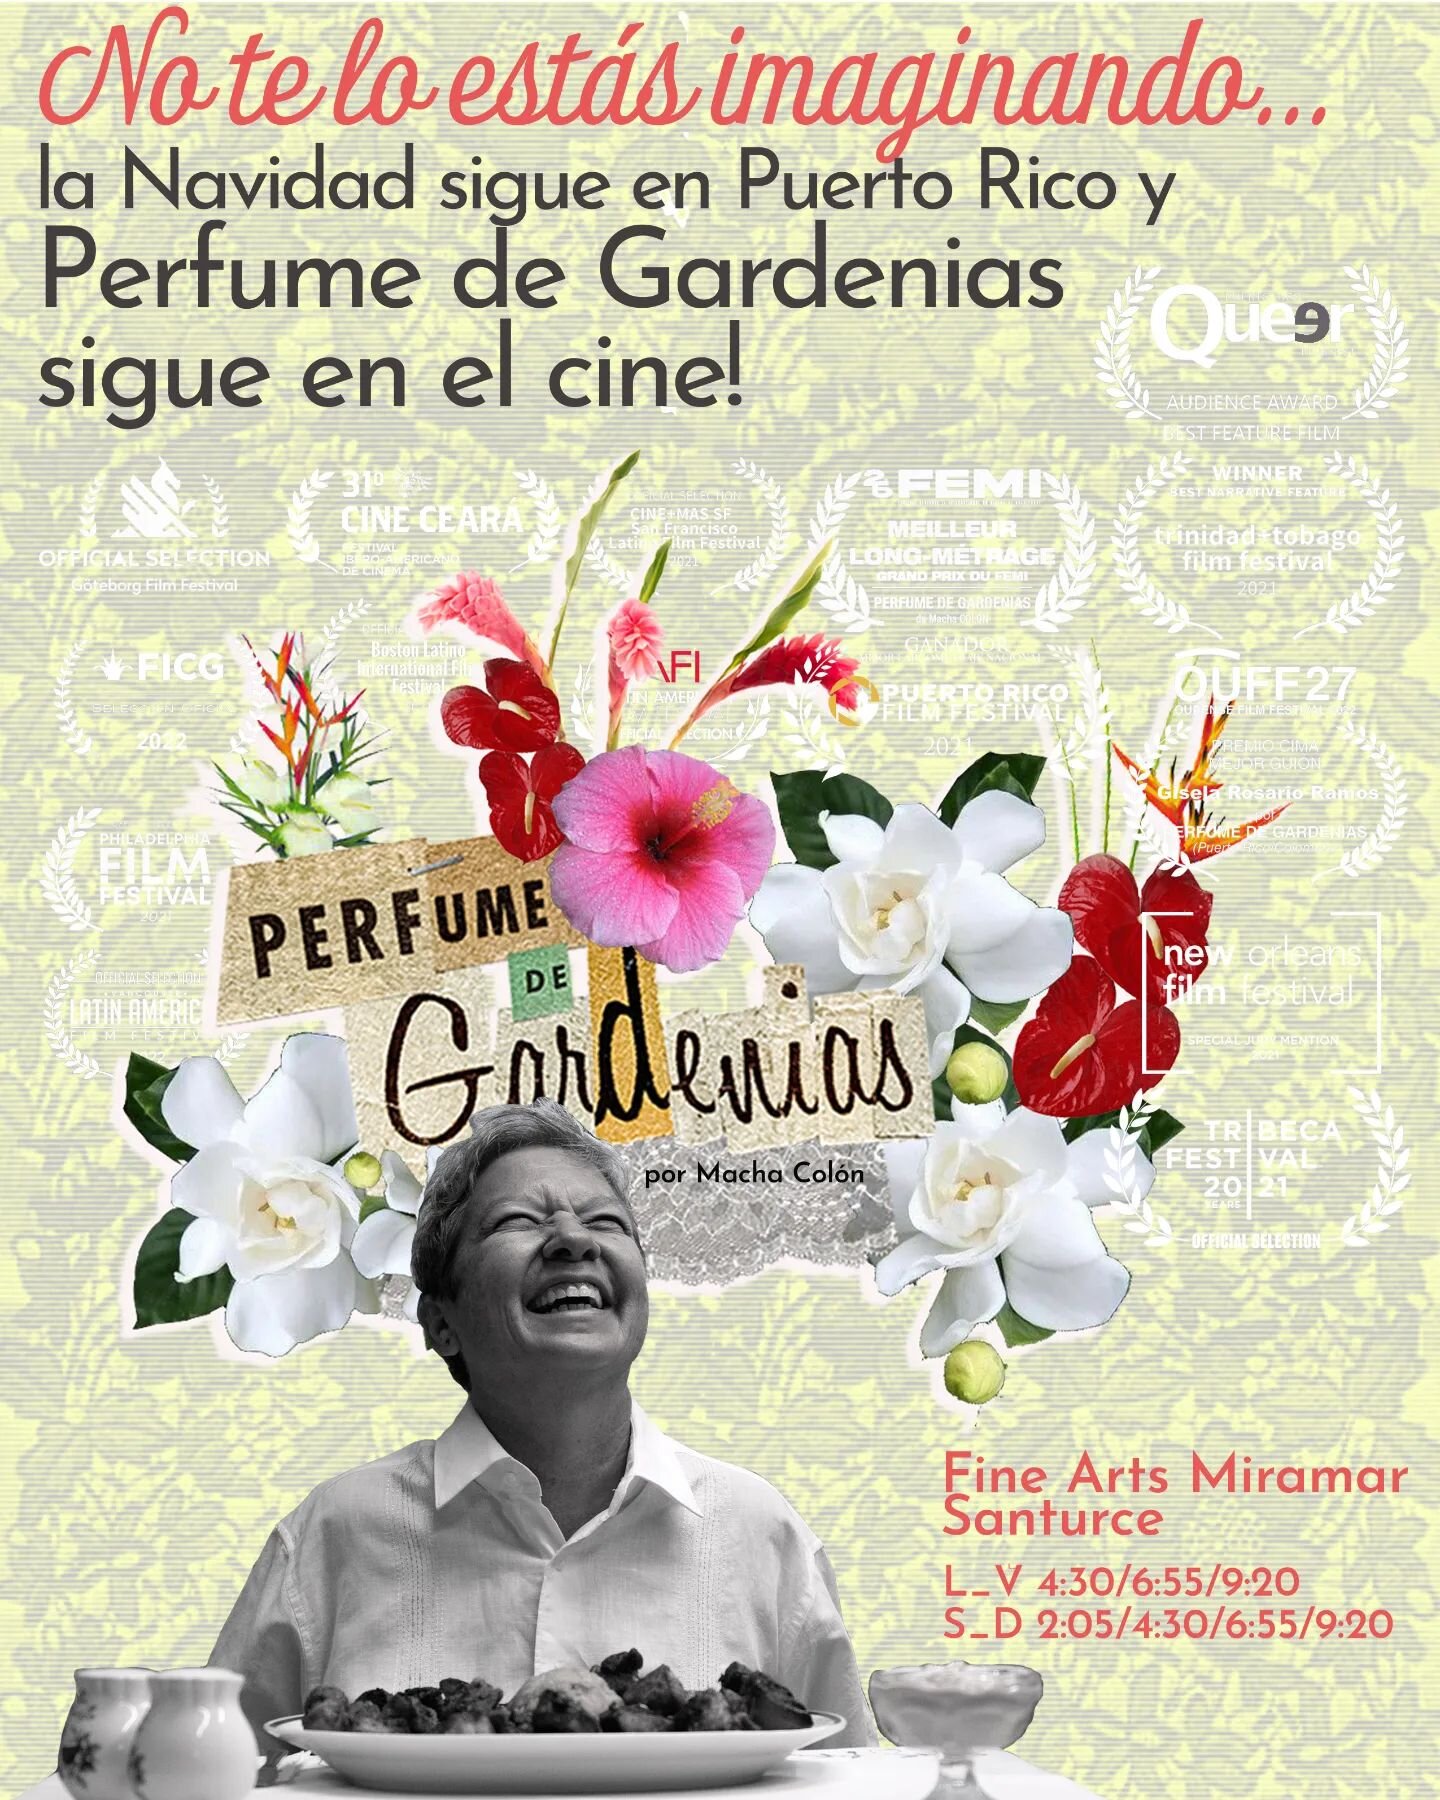 Perfume de Gardenias